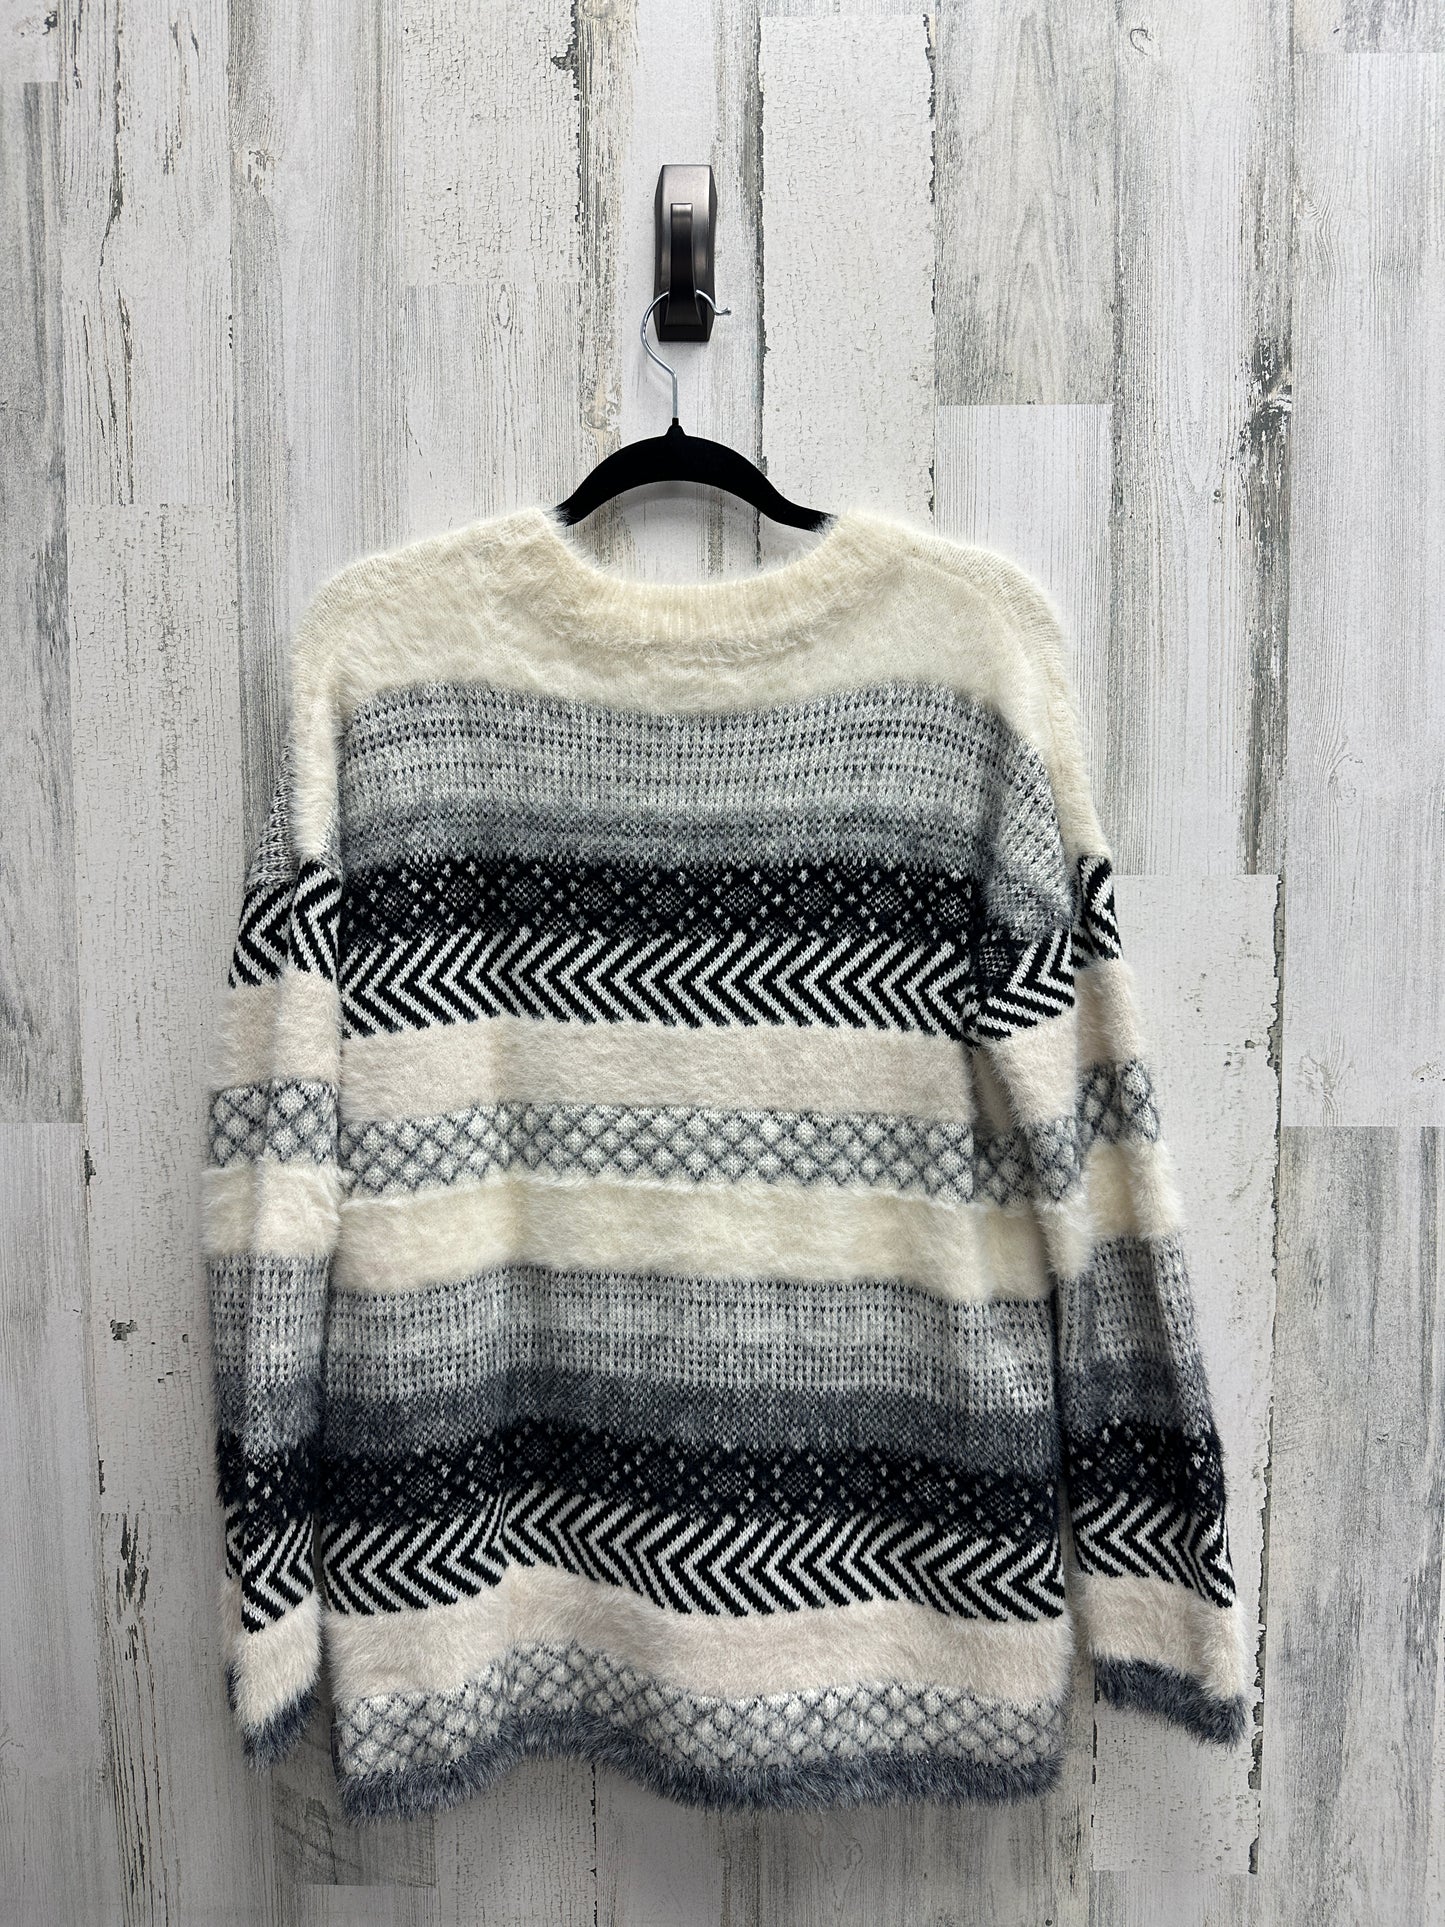 Sweater By Jack By Bb Dakota  Size: L